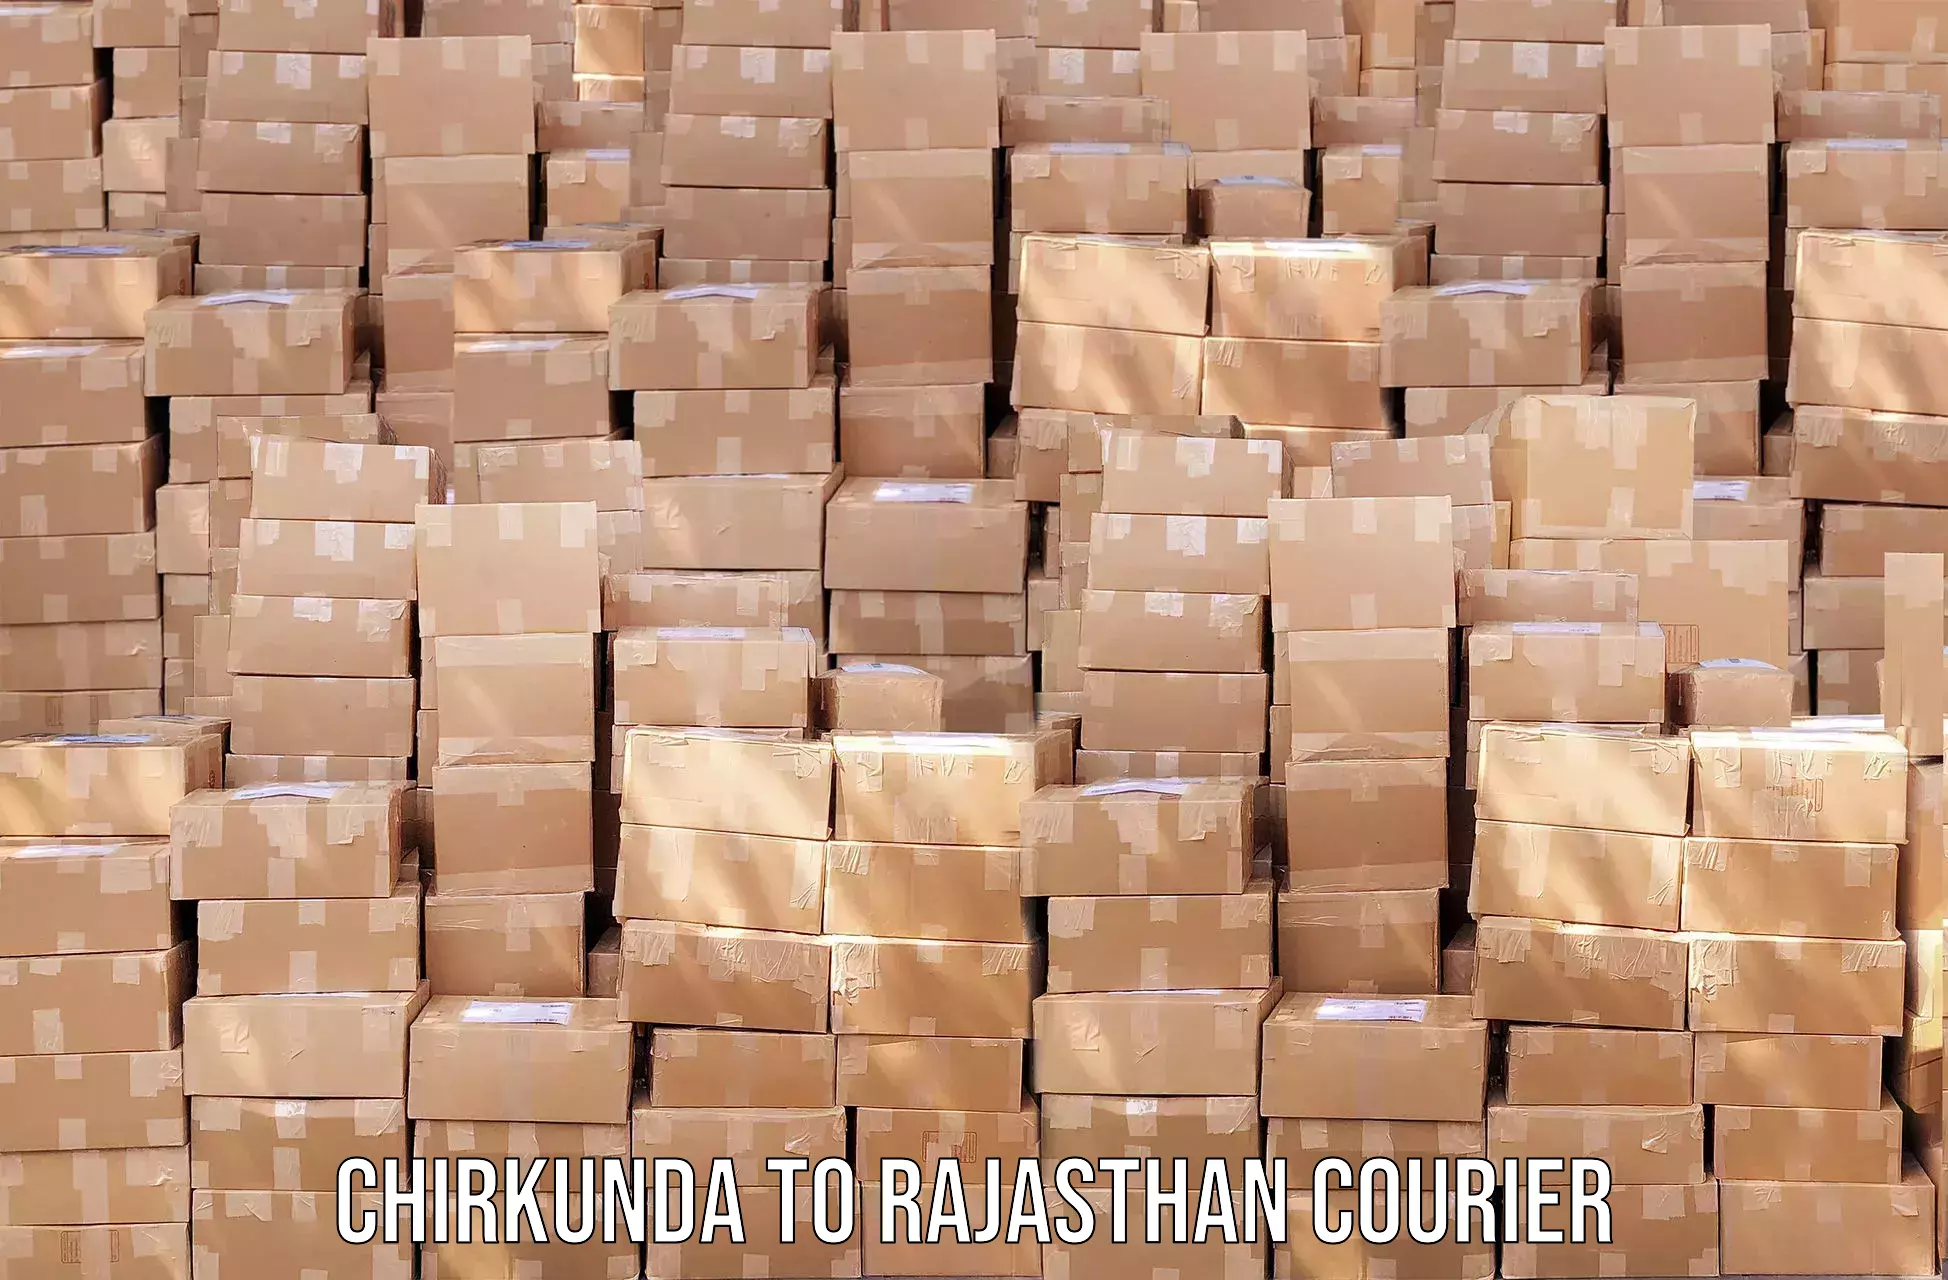 Global courier networks Chirkunda to Jhunjhunu